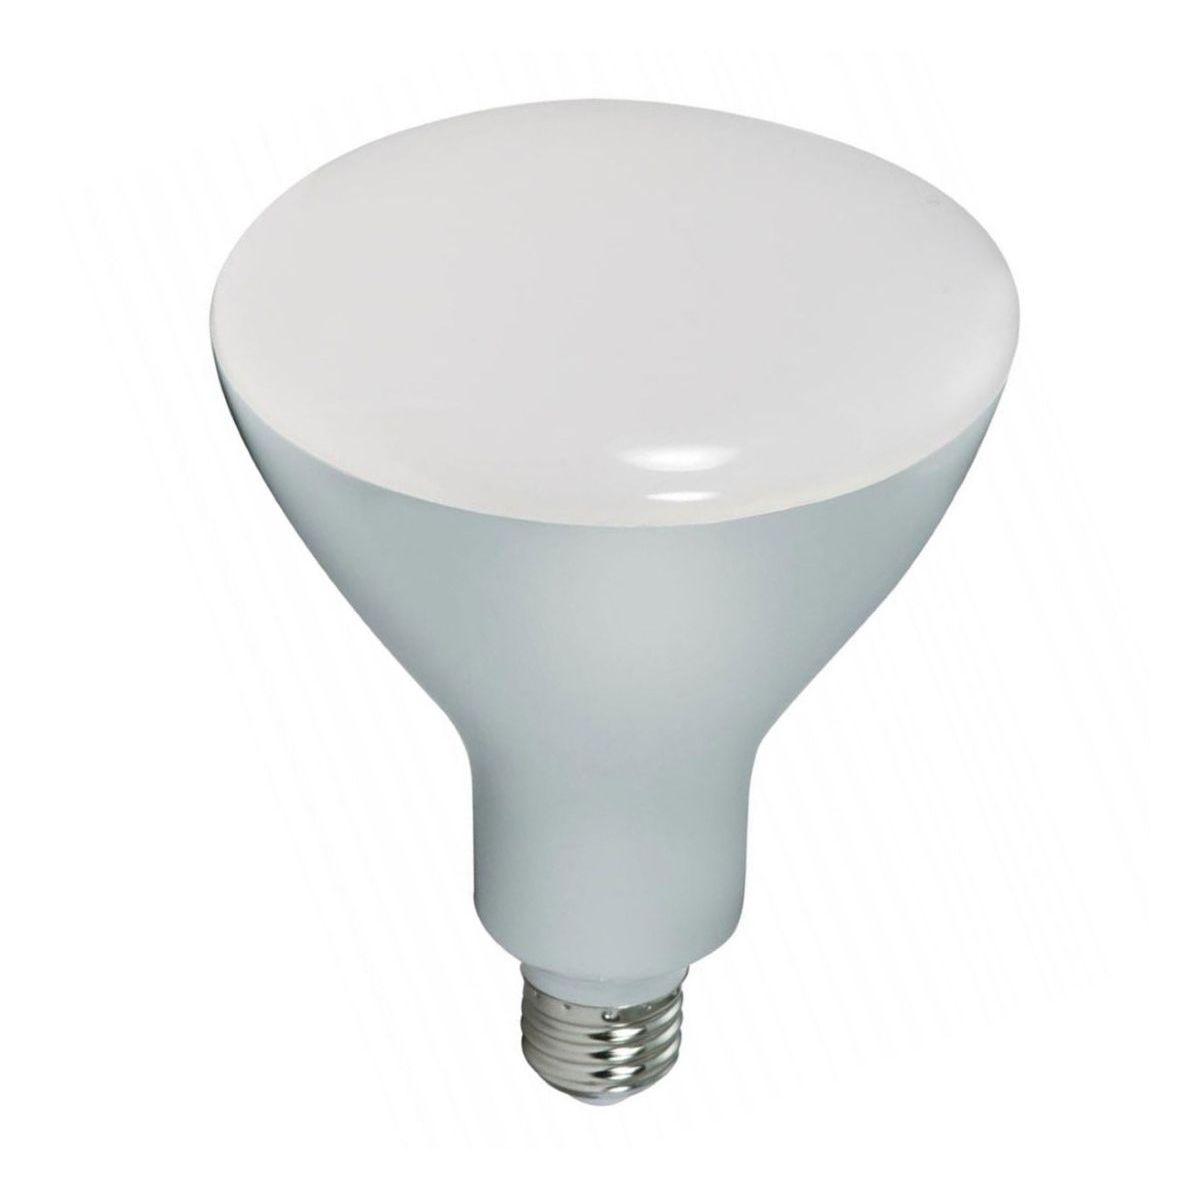 LED R40/BR40 Reflector bulb, 13 watt, 1075 Lumens, 5000K, E26 Medium Base, 103 Deg. Flood